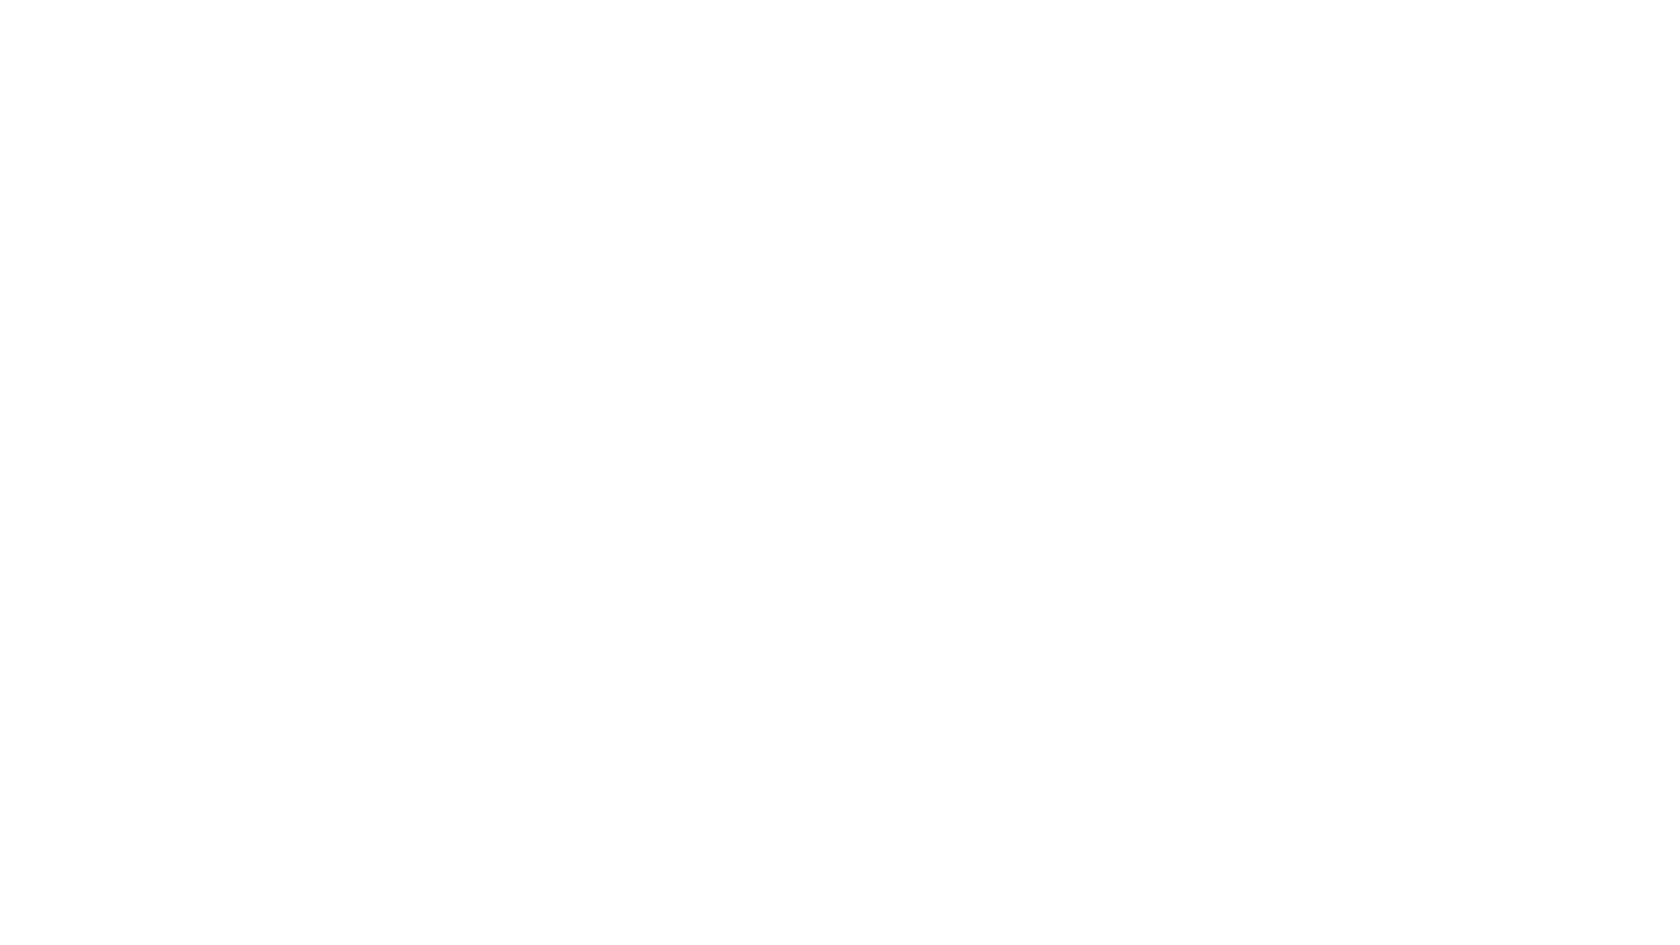 айдентика - логотип жилого комплекса "Бриз"